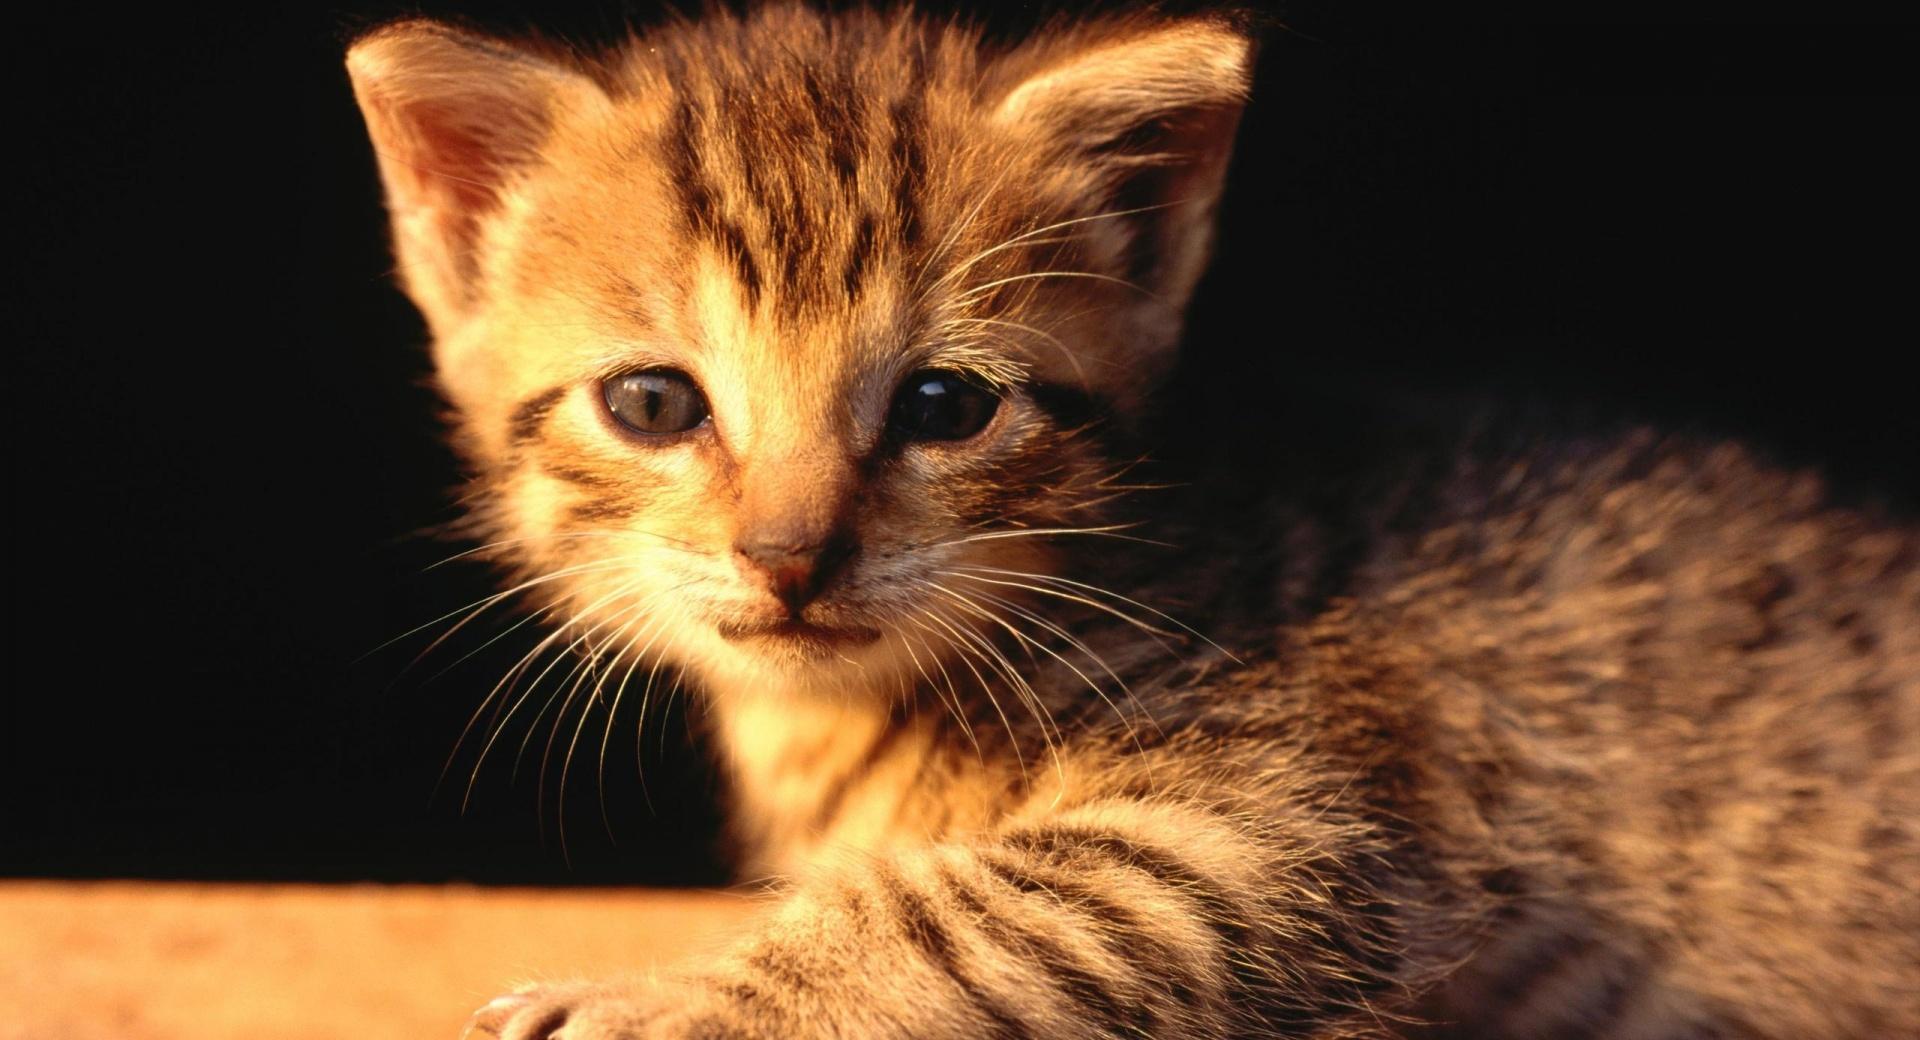 Newborn Tabby Kitten at 1024 x 768 size wallpapers HD quality